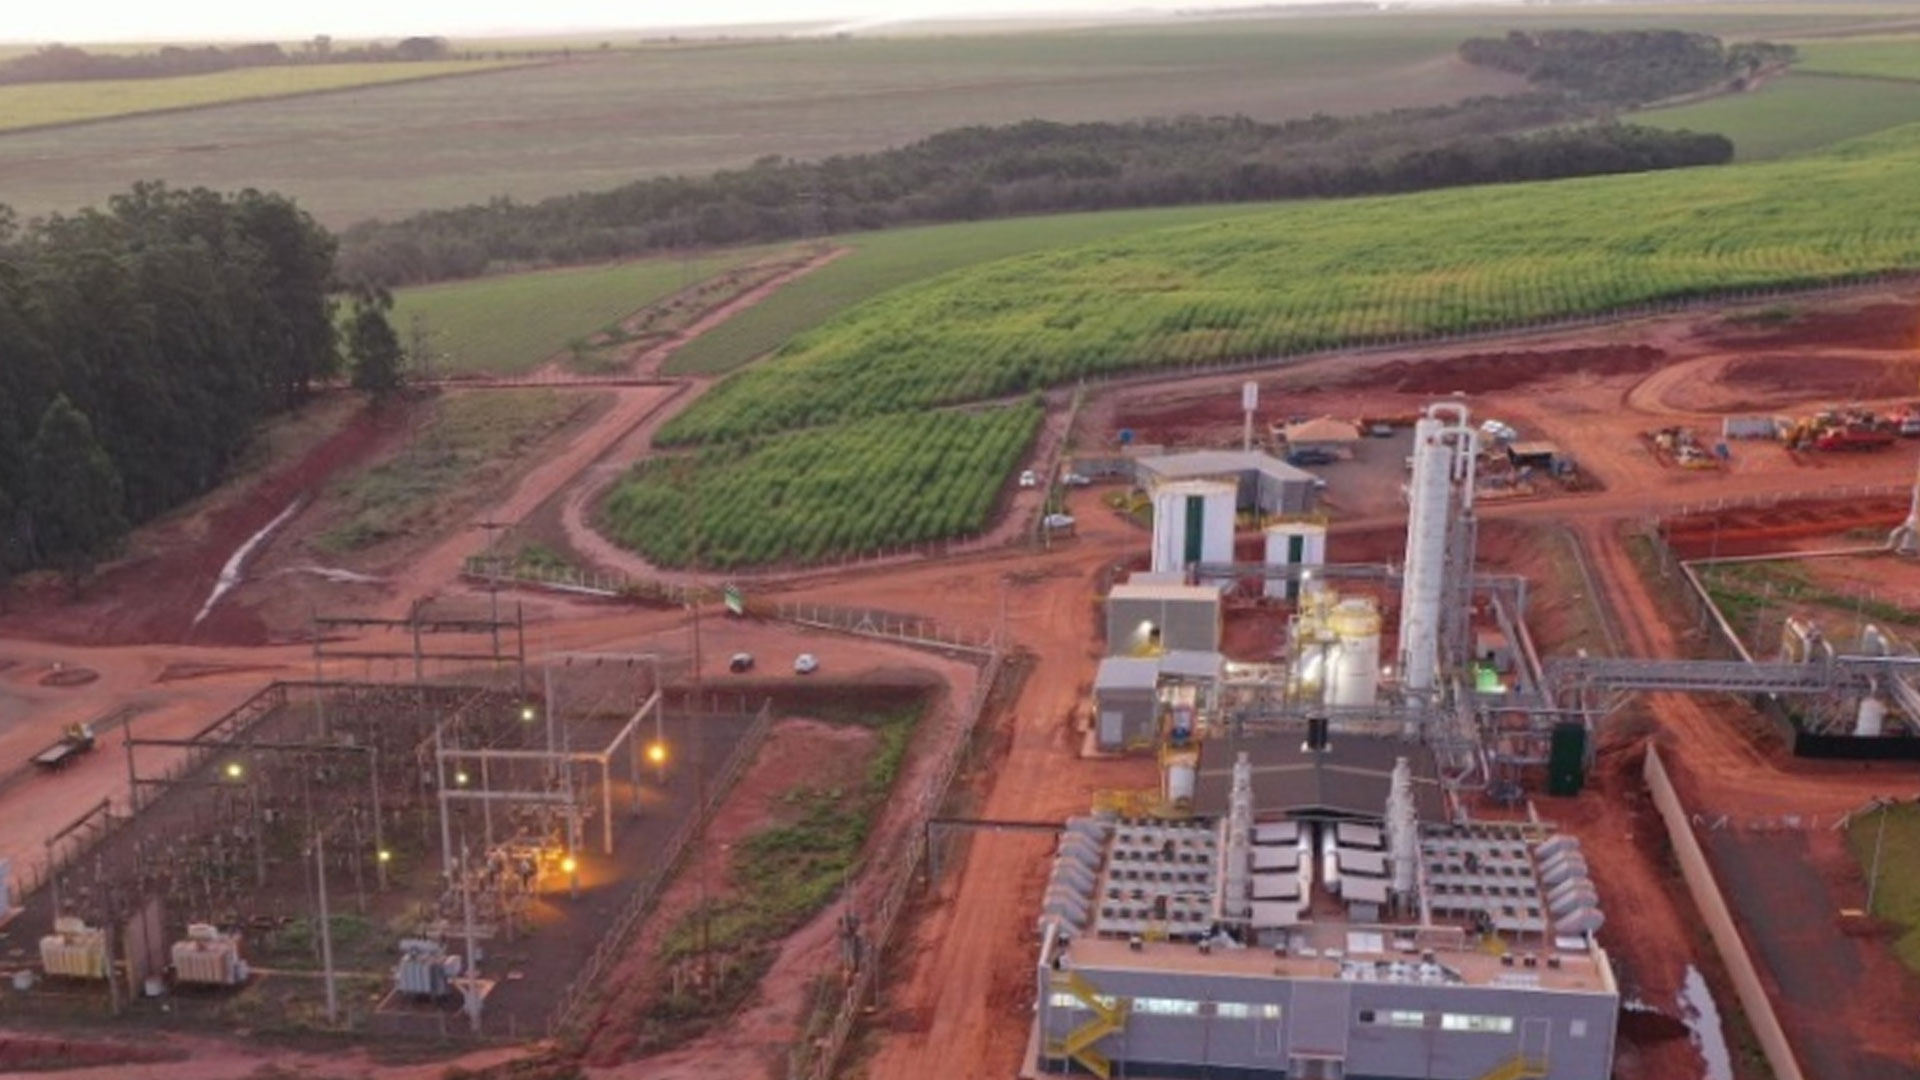 Brazil's sugarcane biogas projects